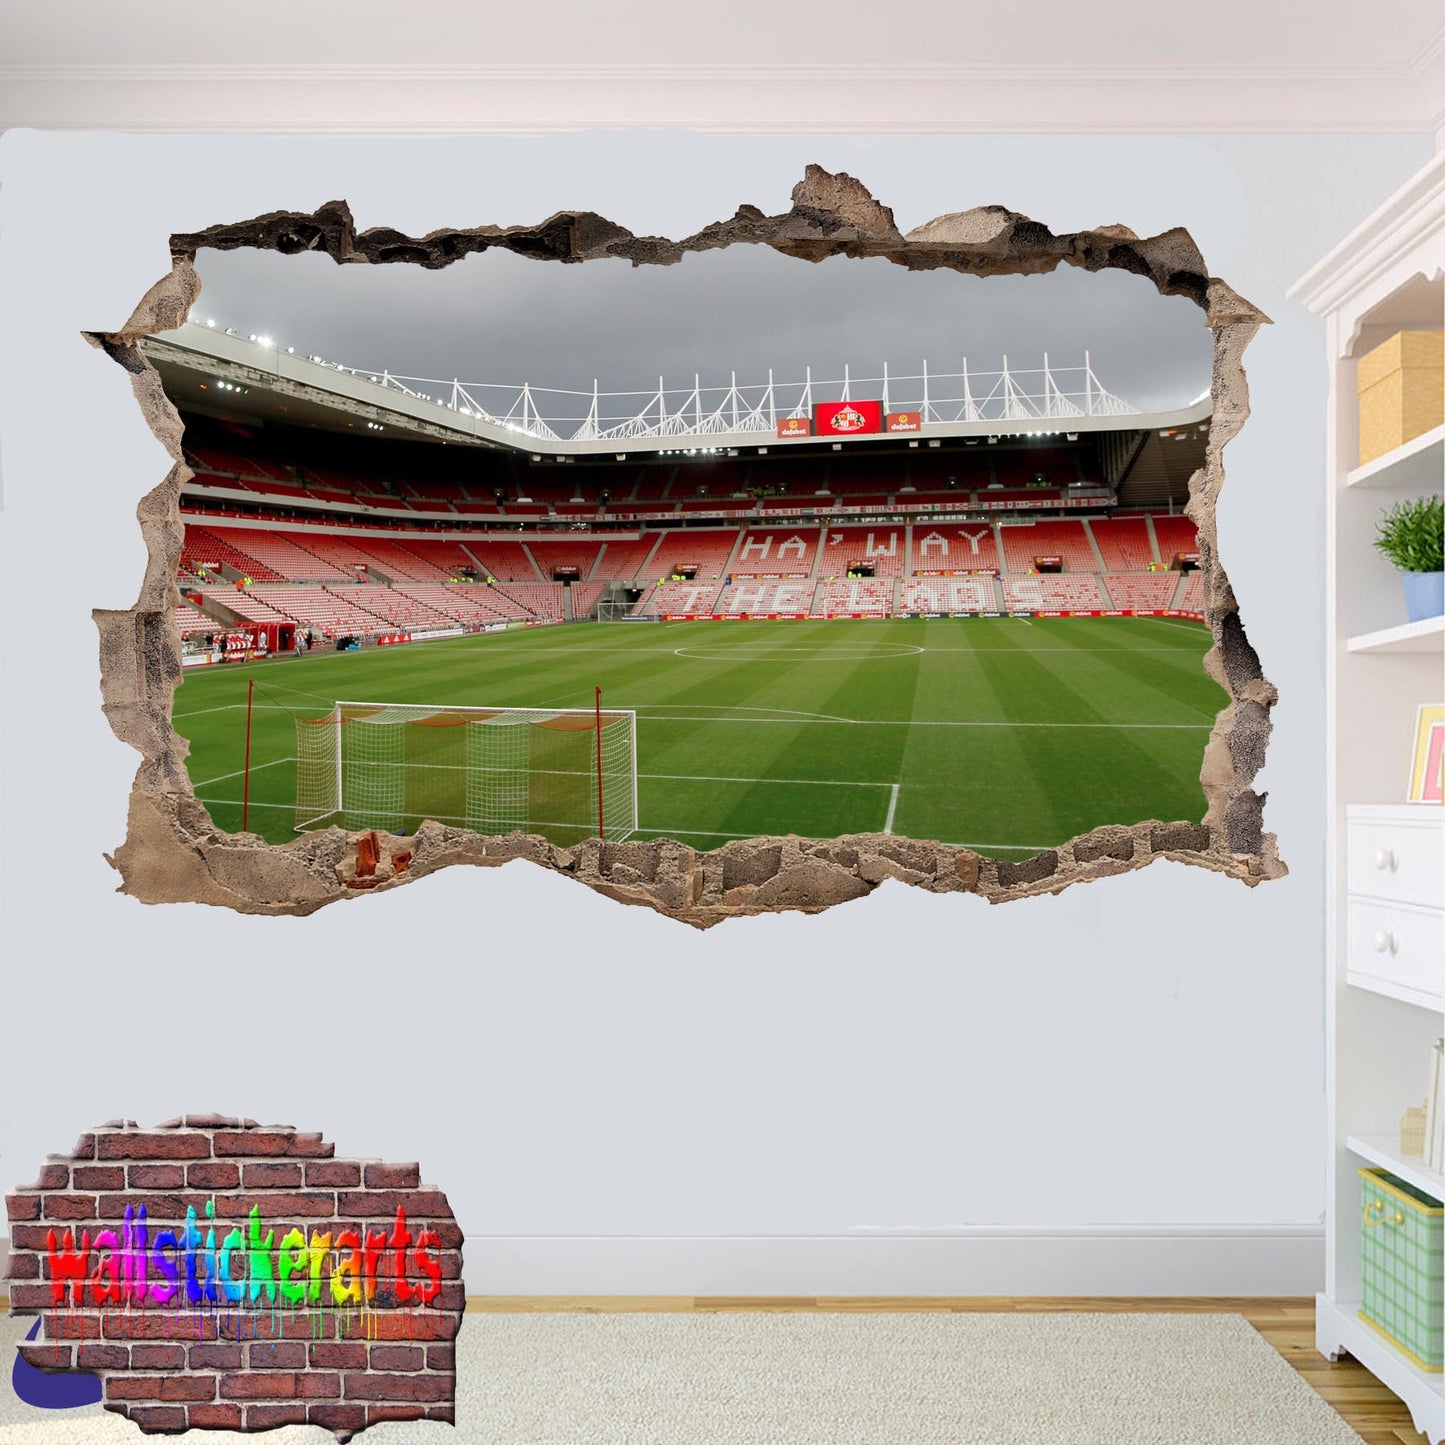 Sunderland Stadium of Light Football Stadium 3d Smashed Wall Sticker Mural Room Office Shop Decoration Decal ZM8